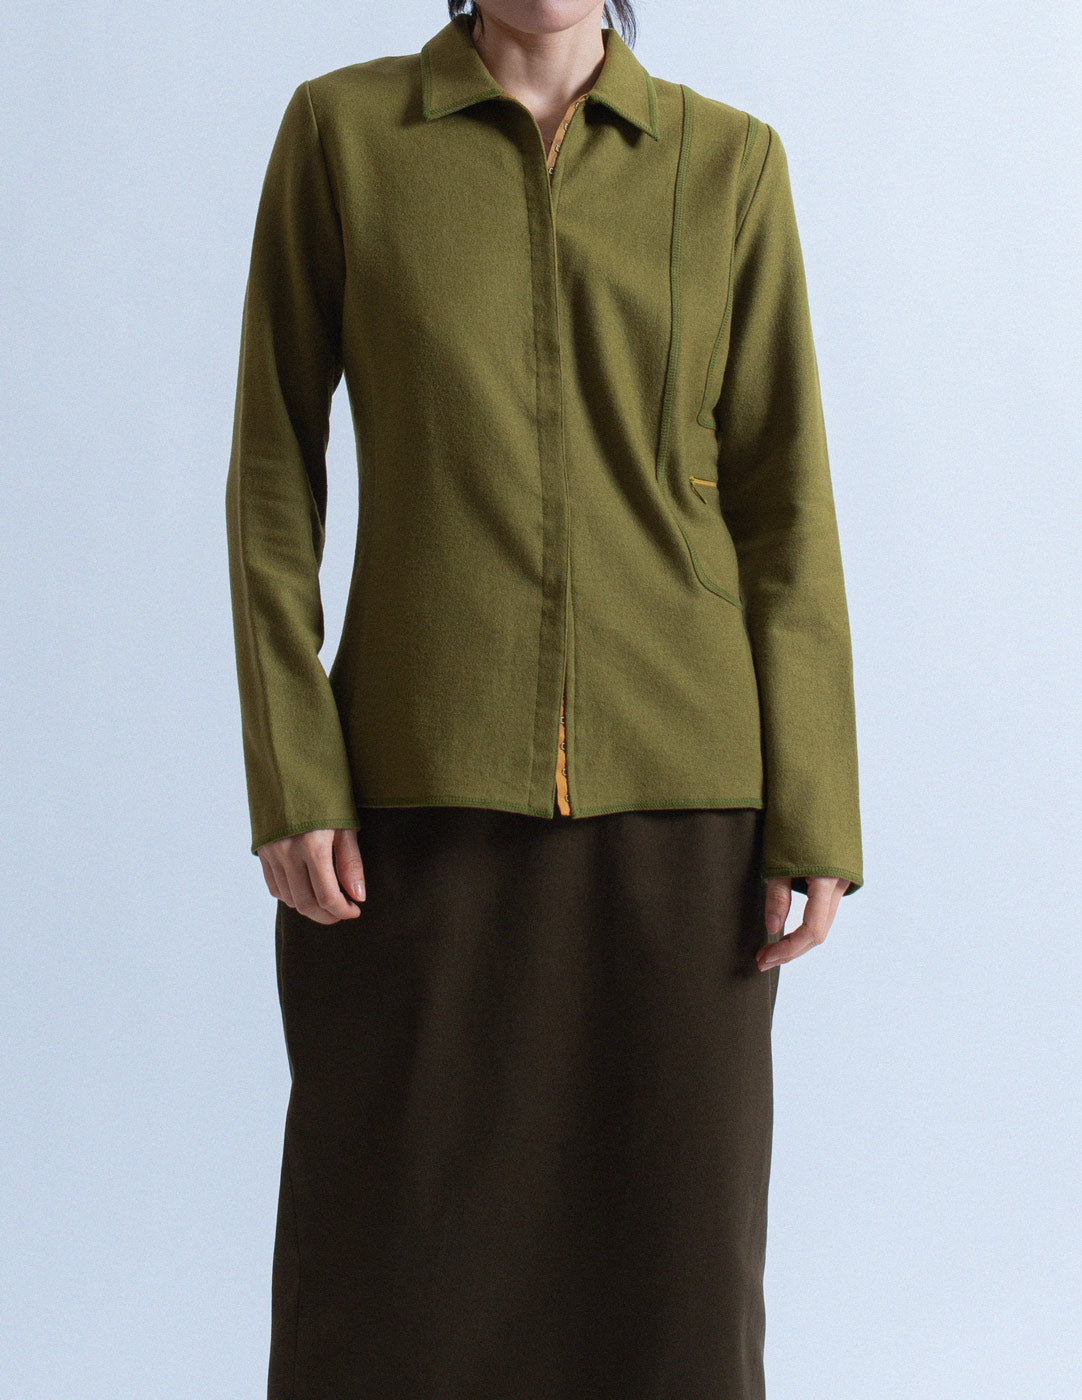 Miu Miu vintage olive green wool shirt front detail